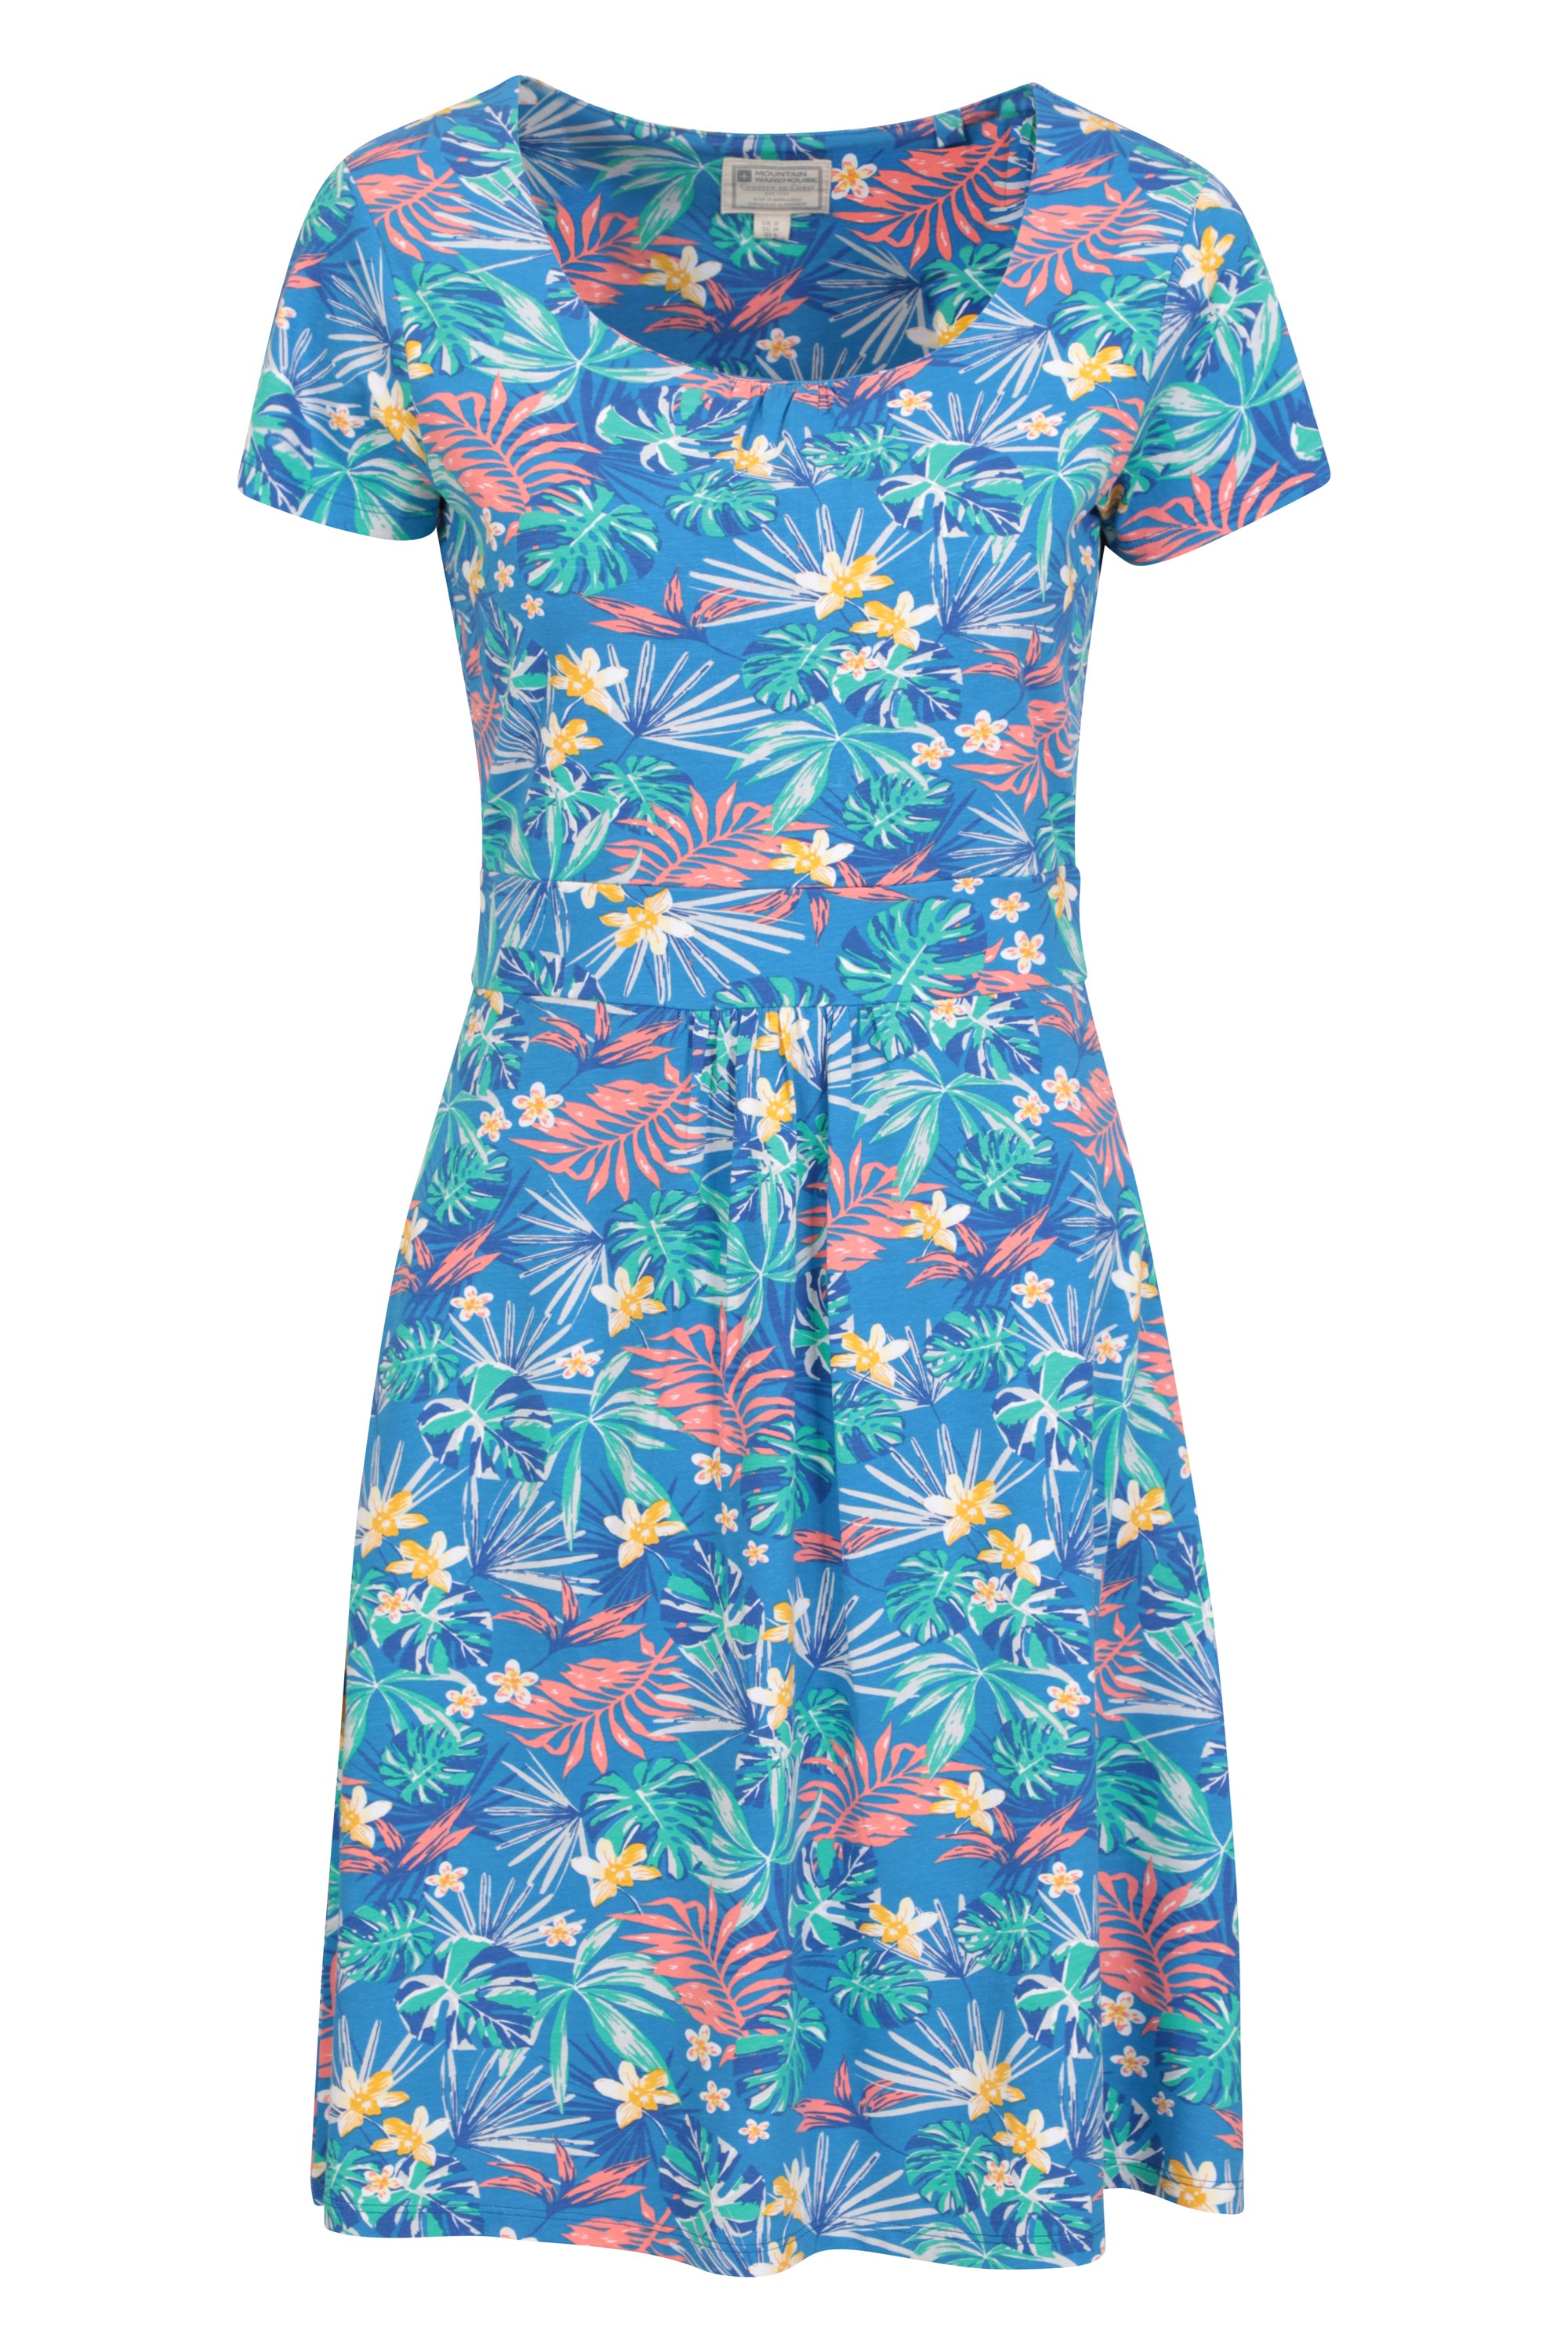 Orchid Patterned – damska sukienka UV - Turquoise